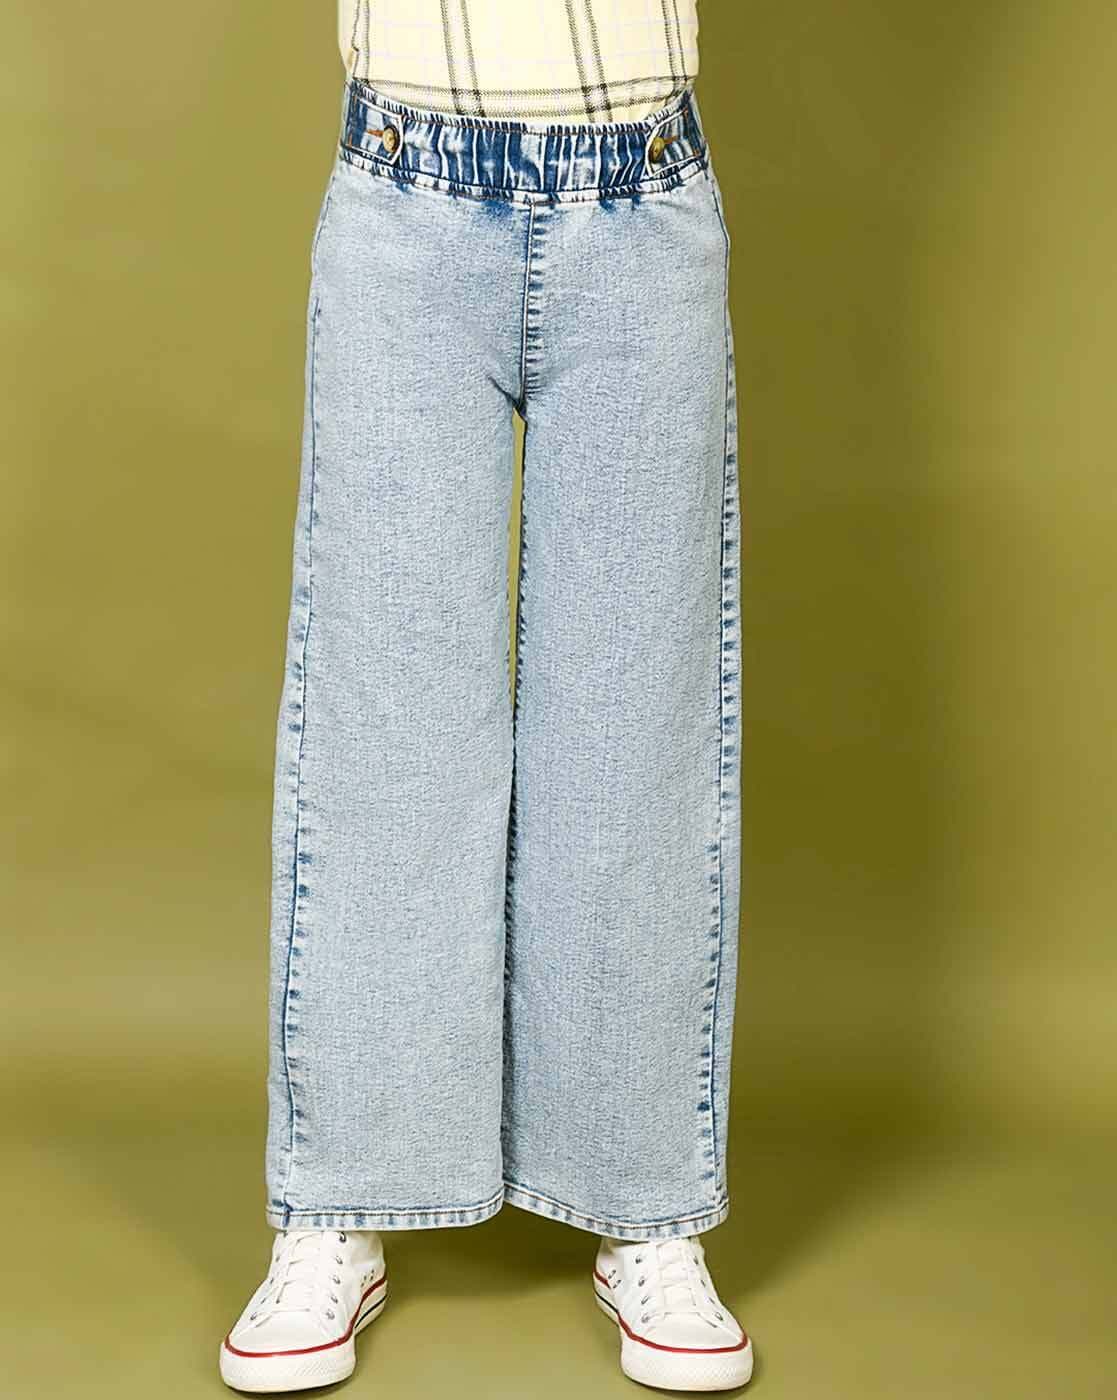 Buy Blue Jeans & Jeggings for Girls by Lilpicks Online